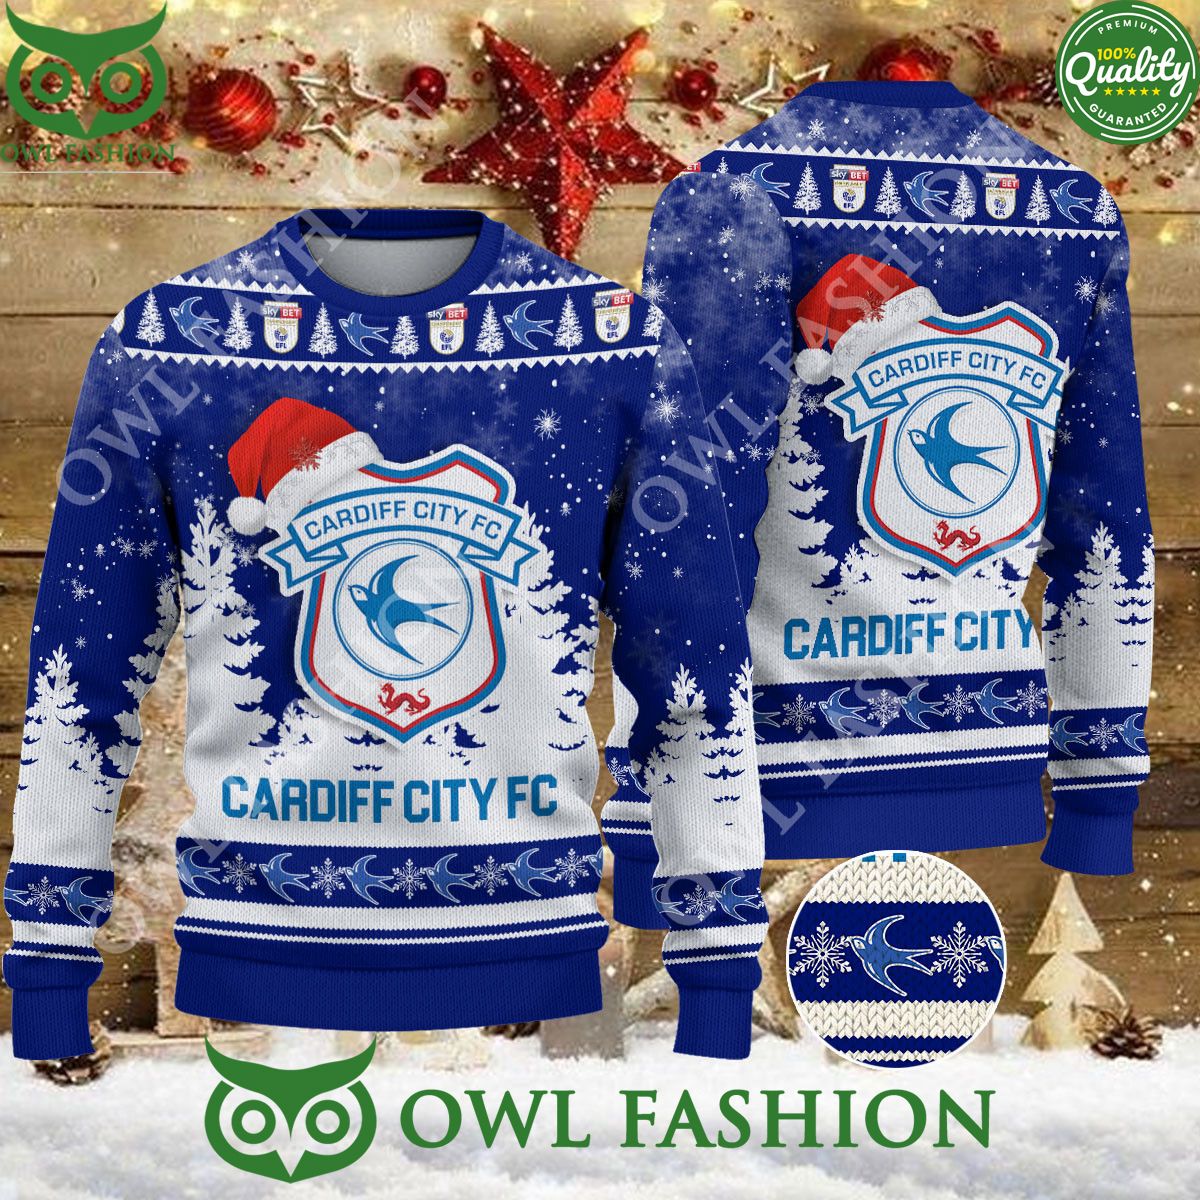 cardiff city fc christmas efl ugly premier league sweater jumper 1 BRYtD.jpg